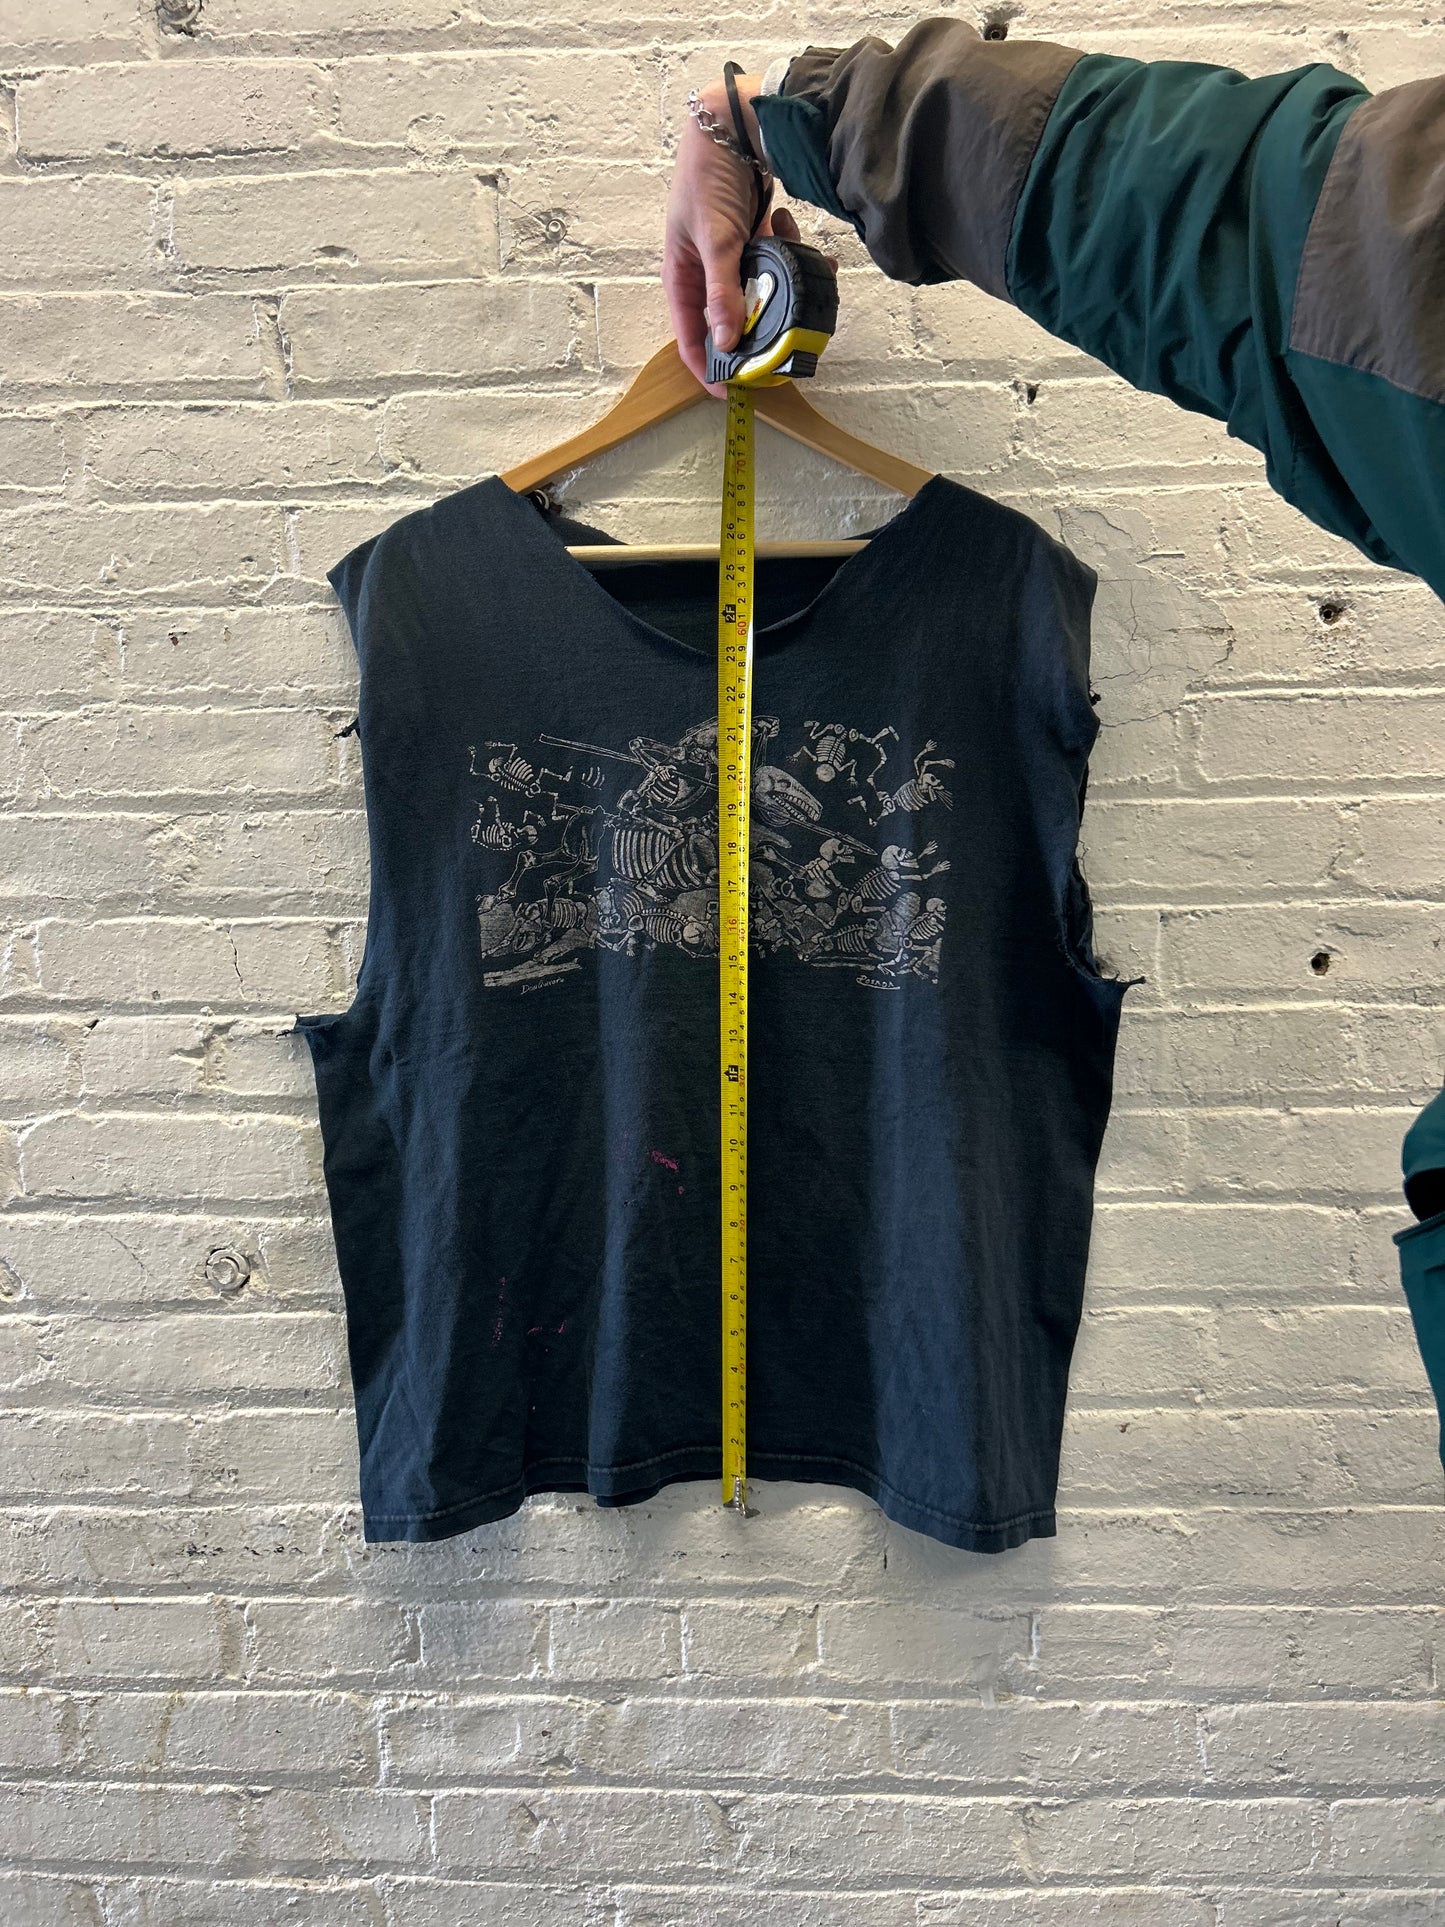 Don Quixote Ripped Shirt - Large